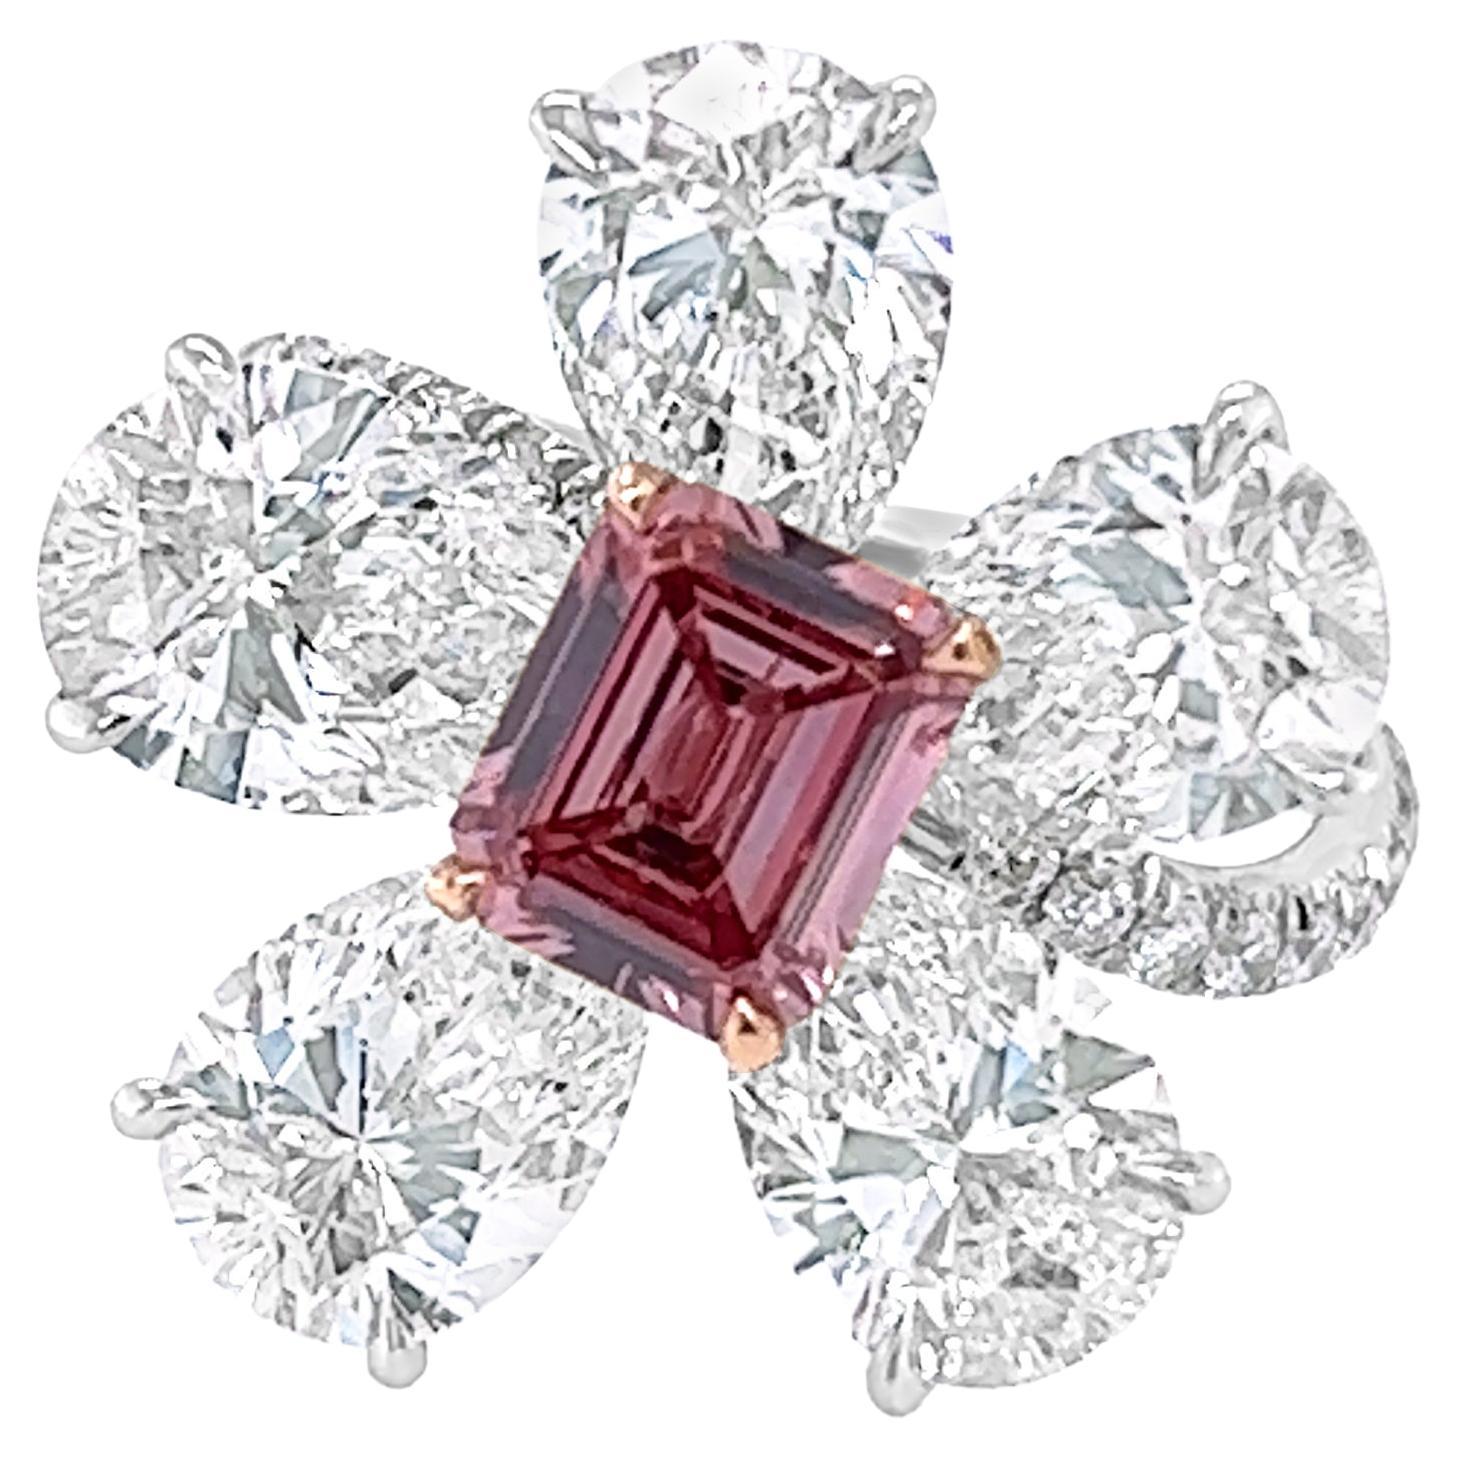 David Rosenberg 1.10ct Emerald Cut Fancy Deep Pink GIA Flower Diamond Ring